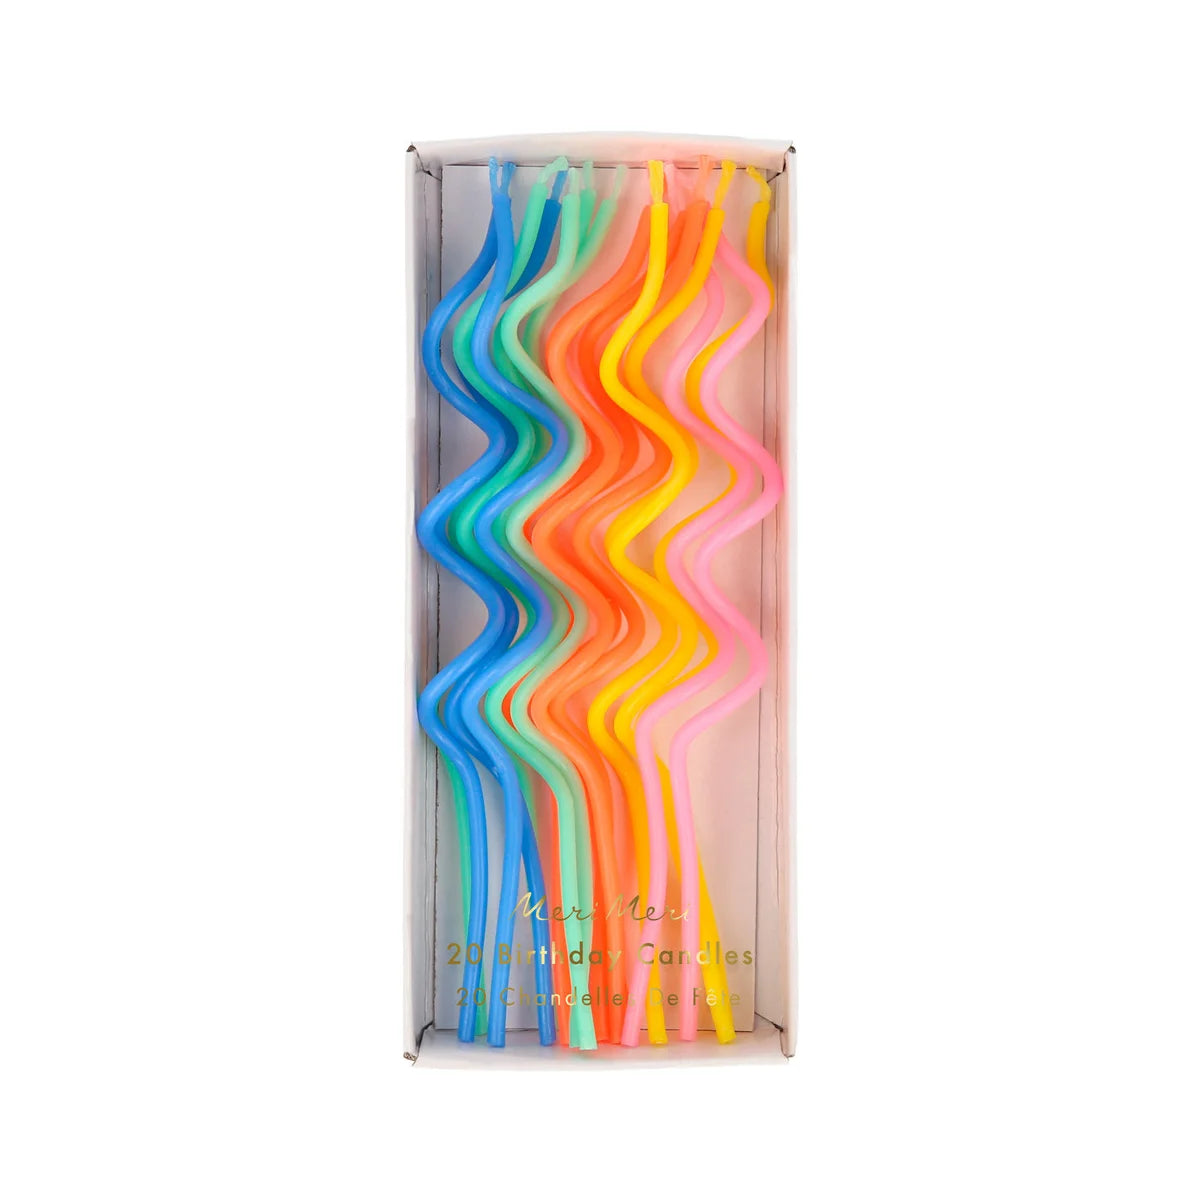 Rainbow swirly candles sold at ALittleConfetti, by Meri Meri